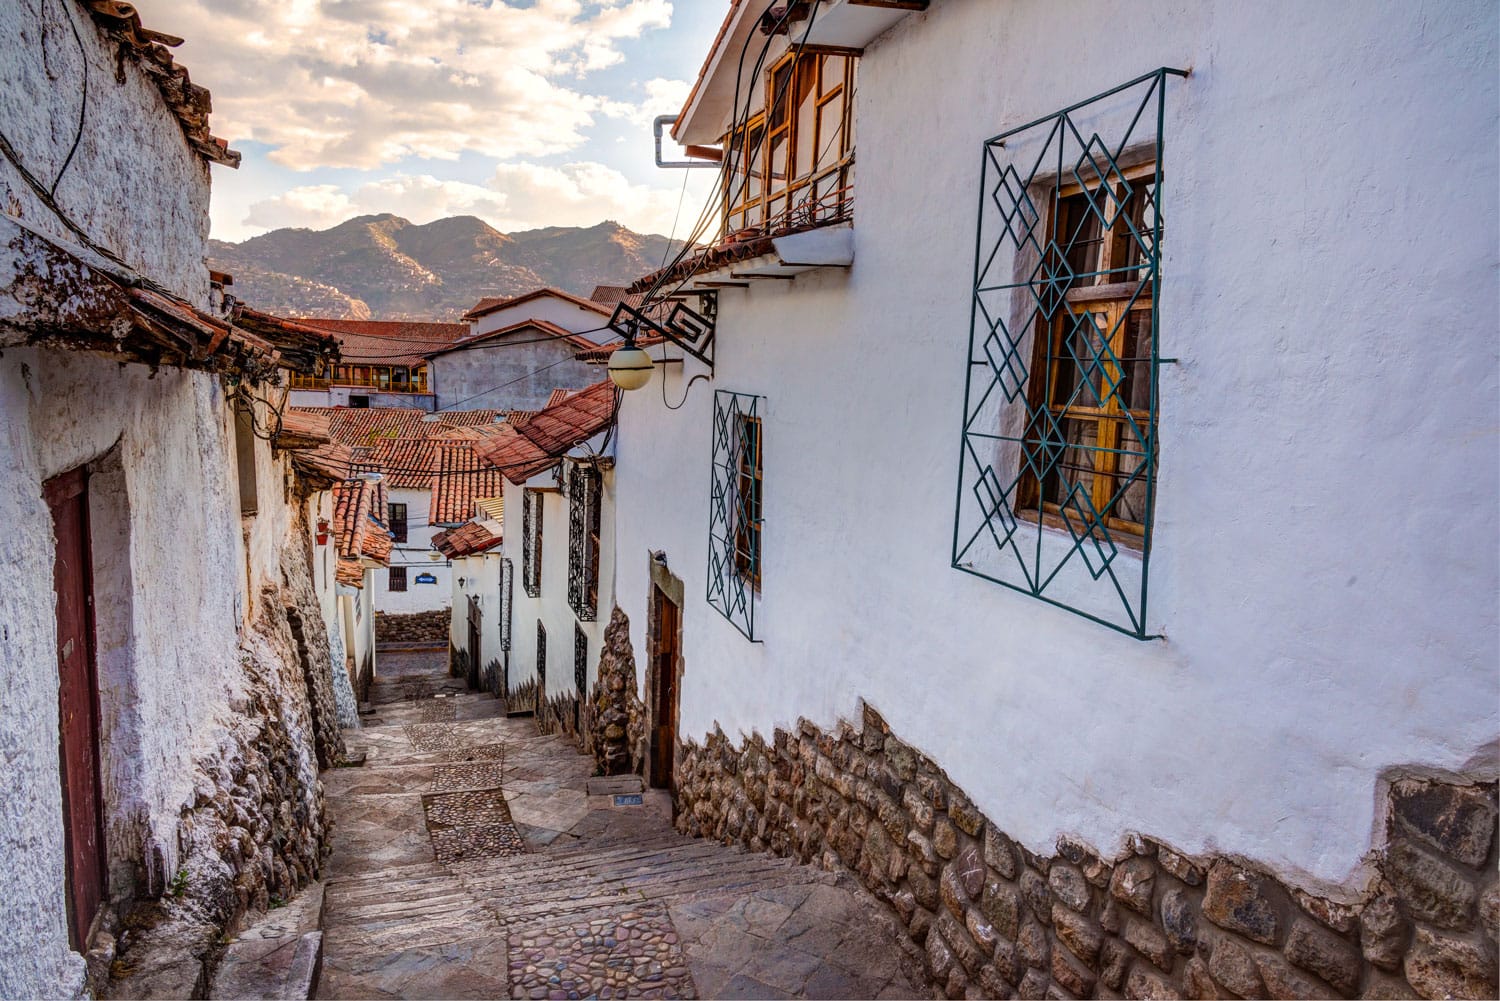 View of San Blas town streets in Cusco, Peru